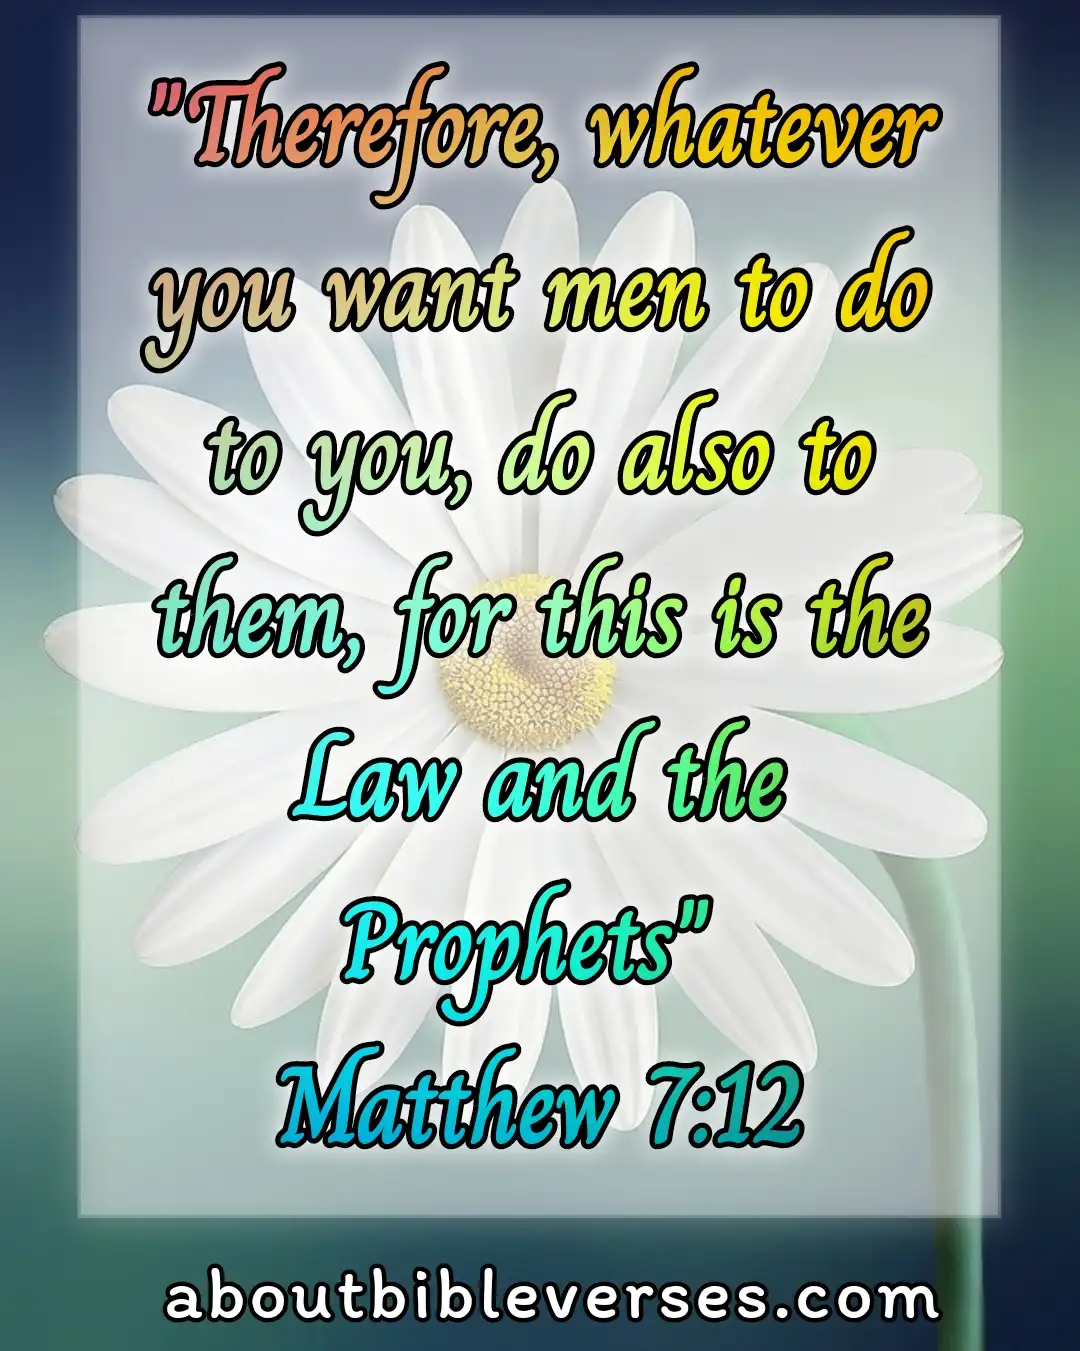 today bible verse (Matthew 7:12)